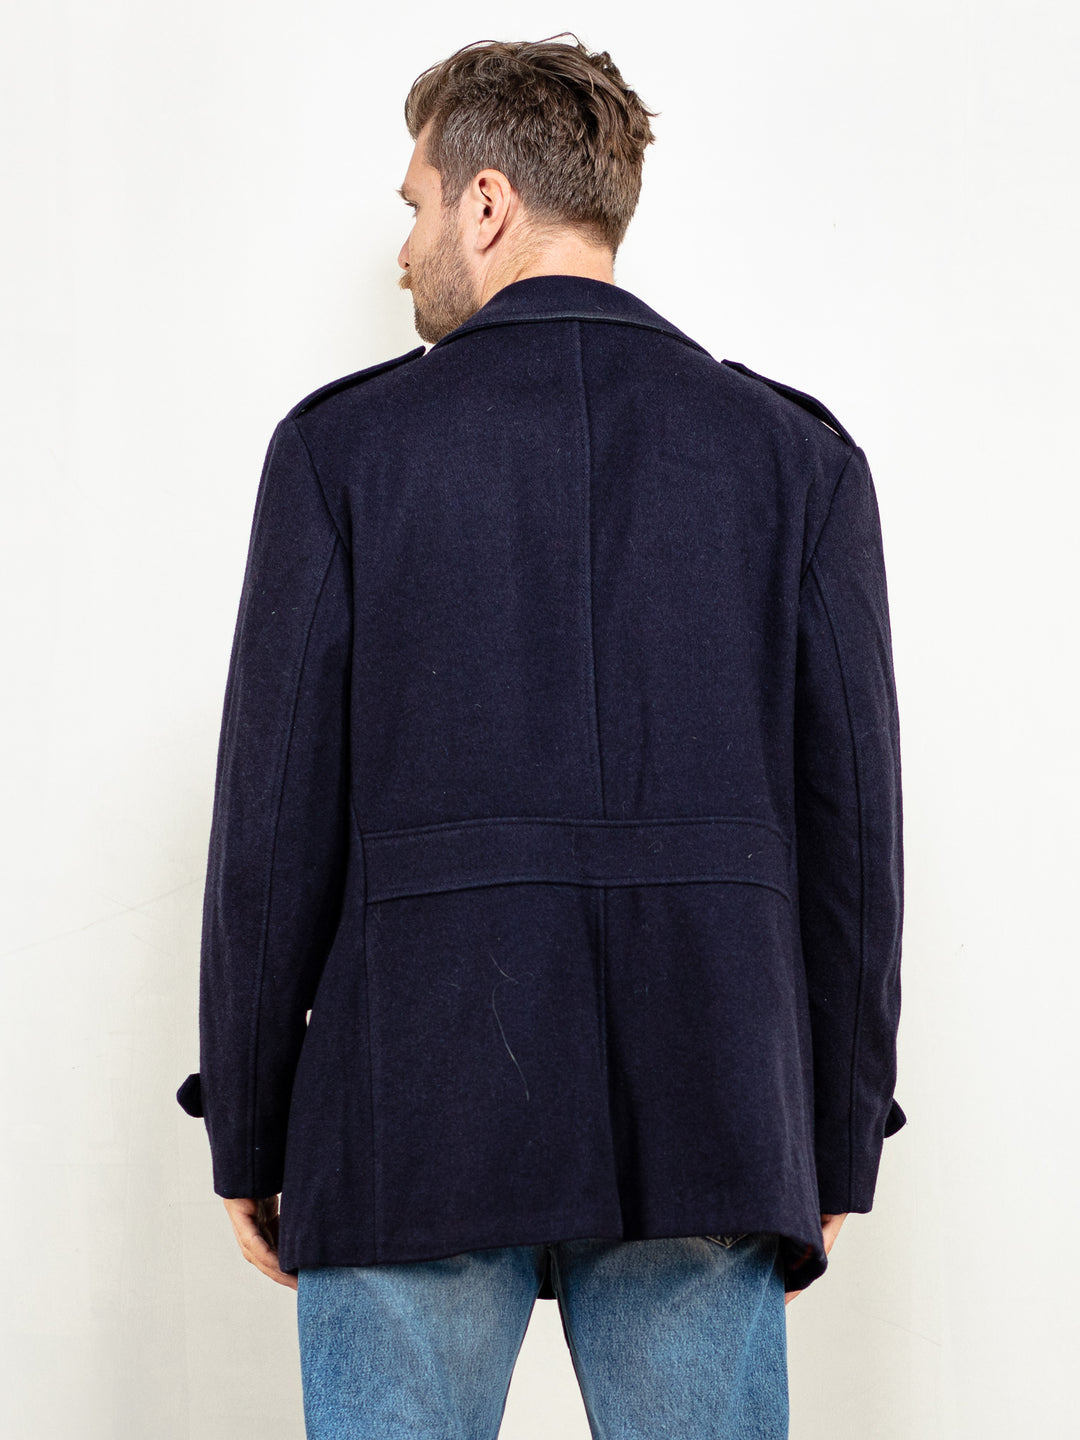 Men Wool Coat vintage 70’s blue wool winter maxi overcoat boho western sustainable clothing fashion winter western outerwear size large